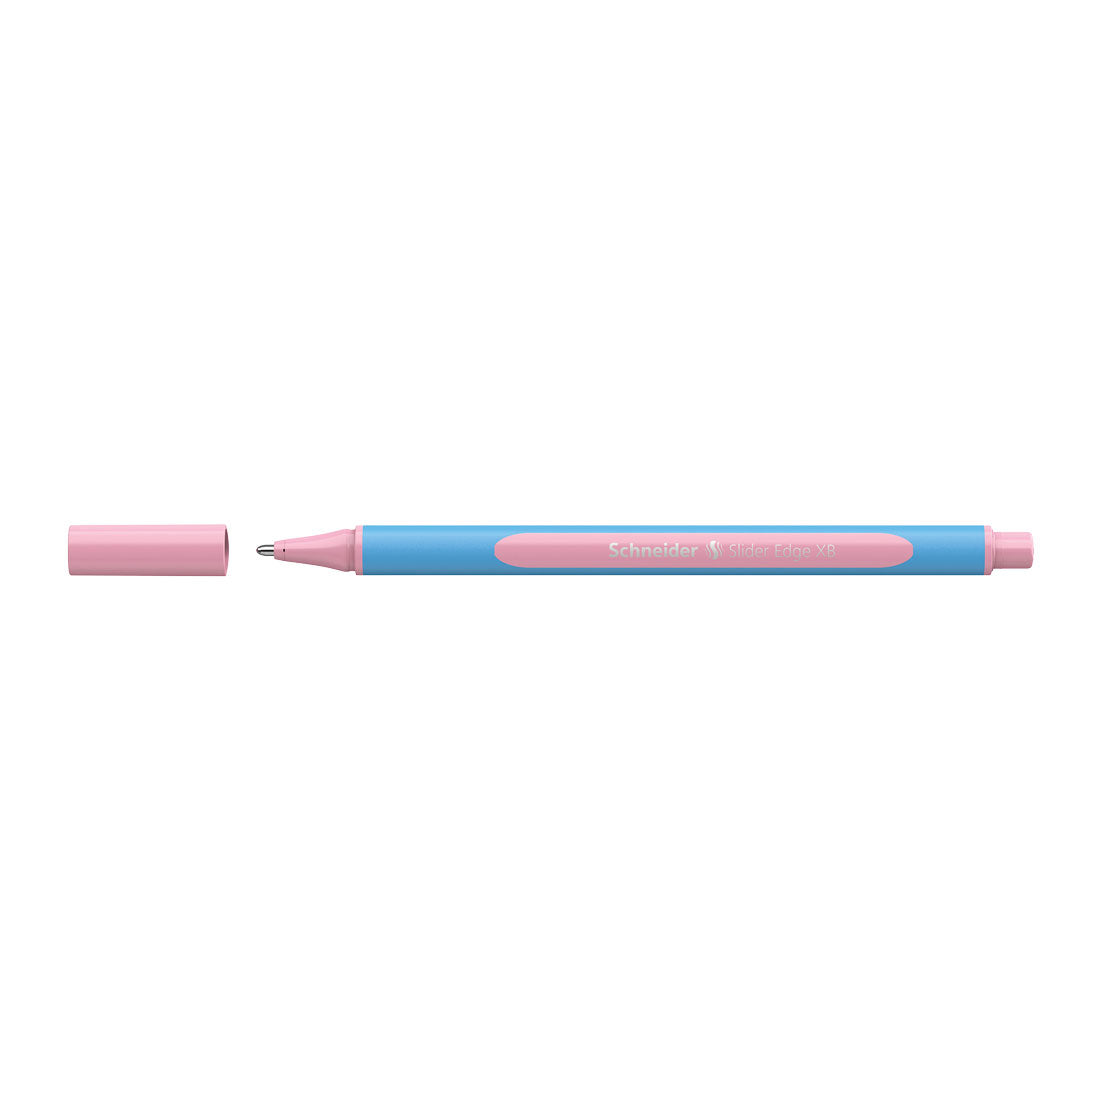 Edge Pastel Ballpoint Pen XB, Box of 10#ink-color_rose